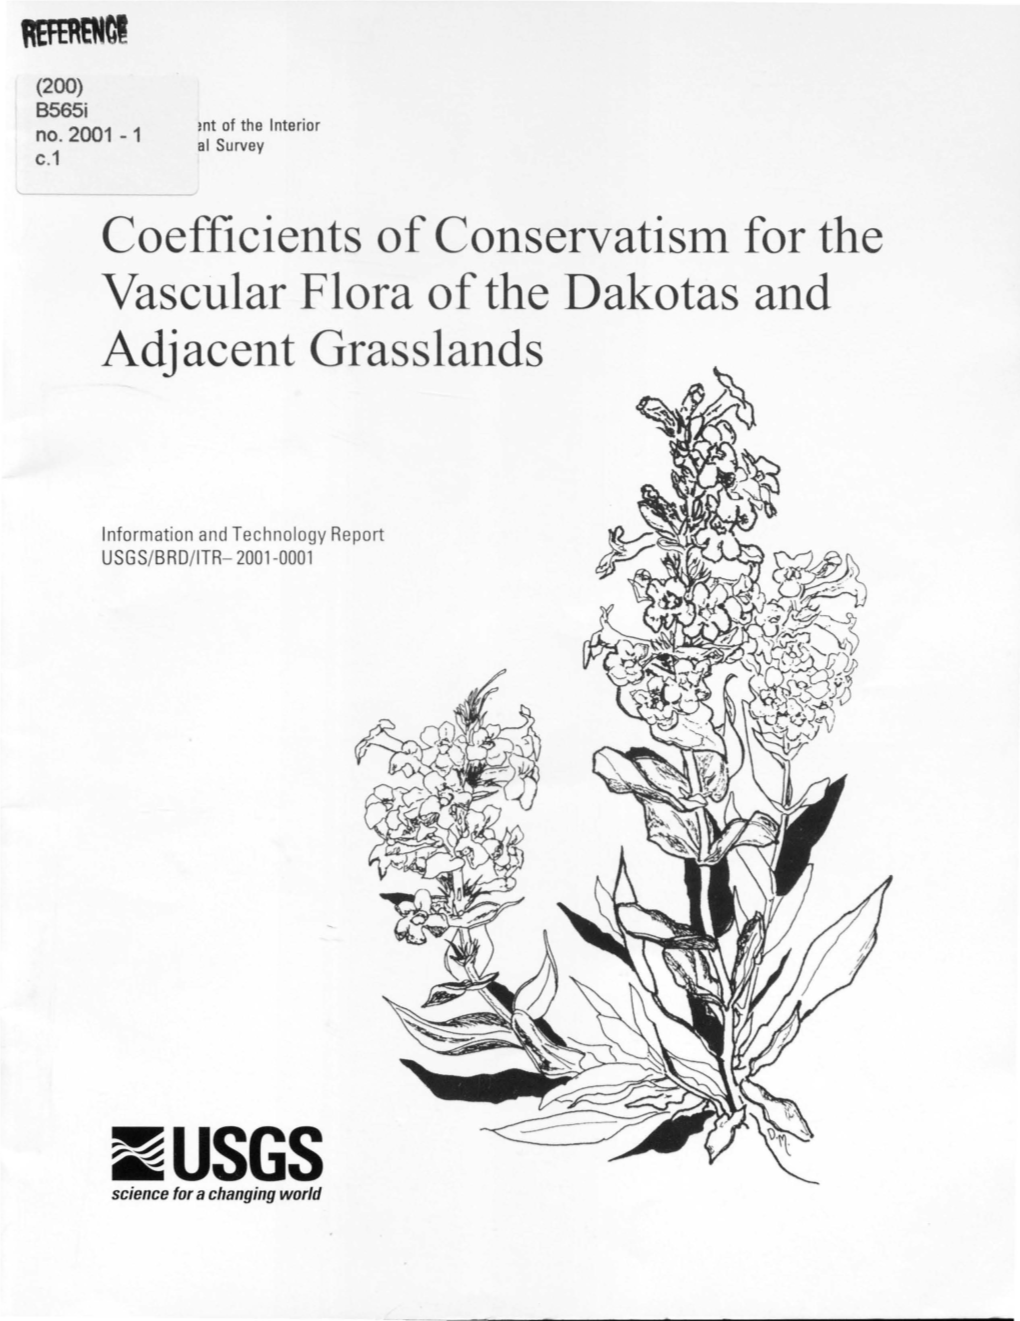 Coefficients of Conservatism for the Vascular Flora of the Dakotas and Adjacent Grasslands